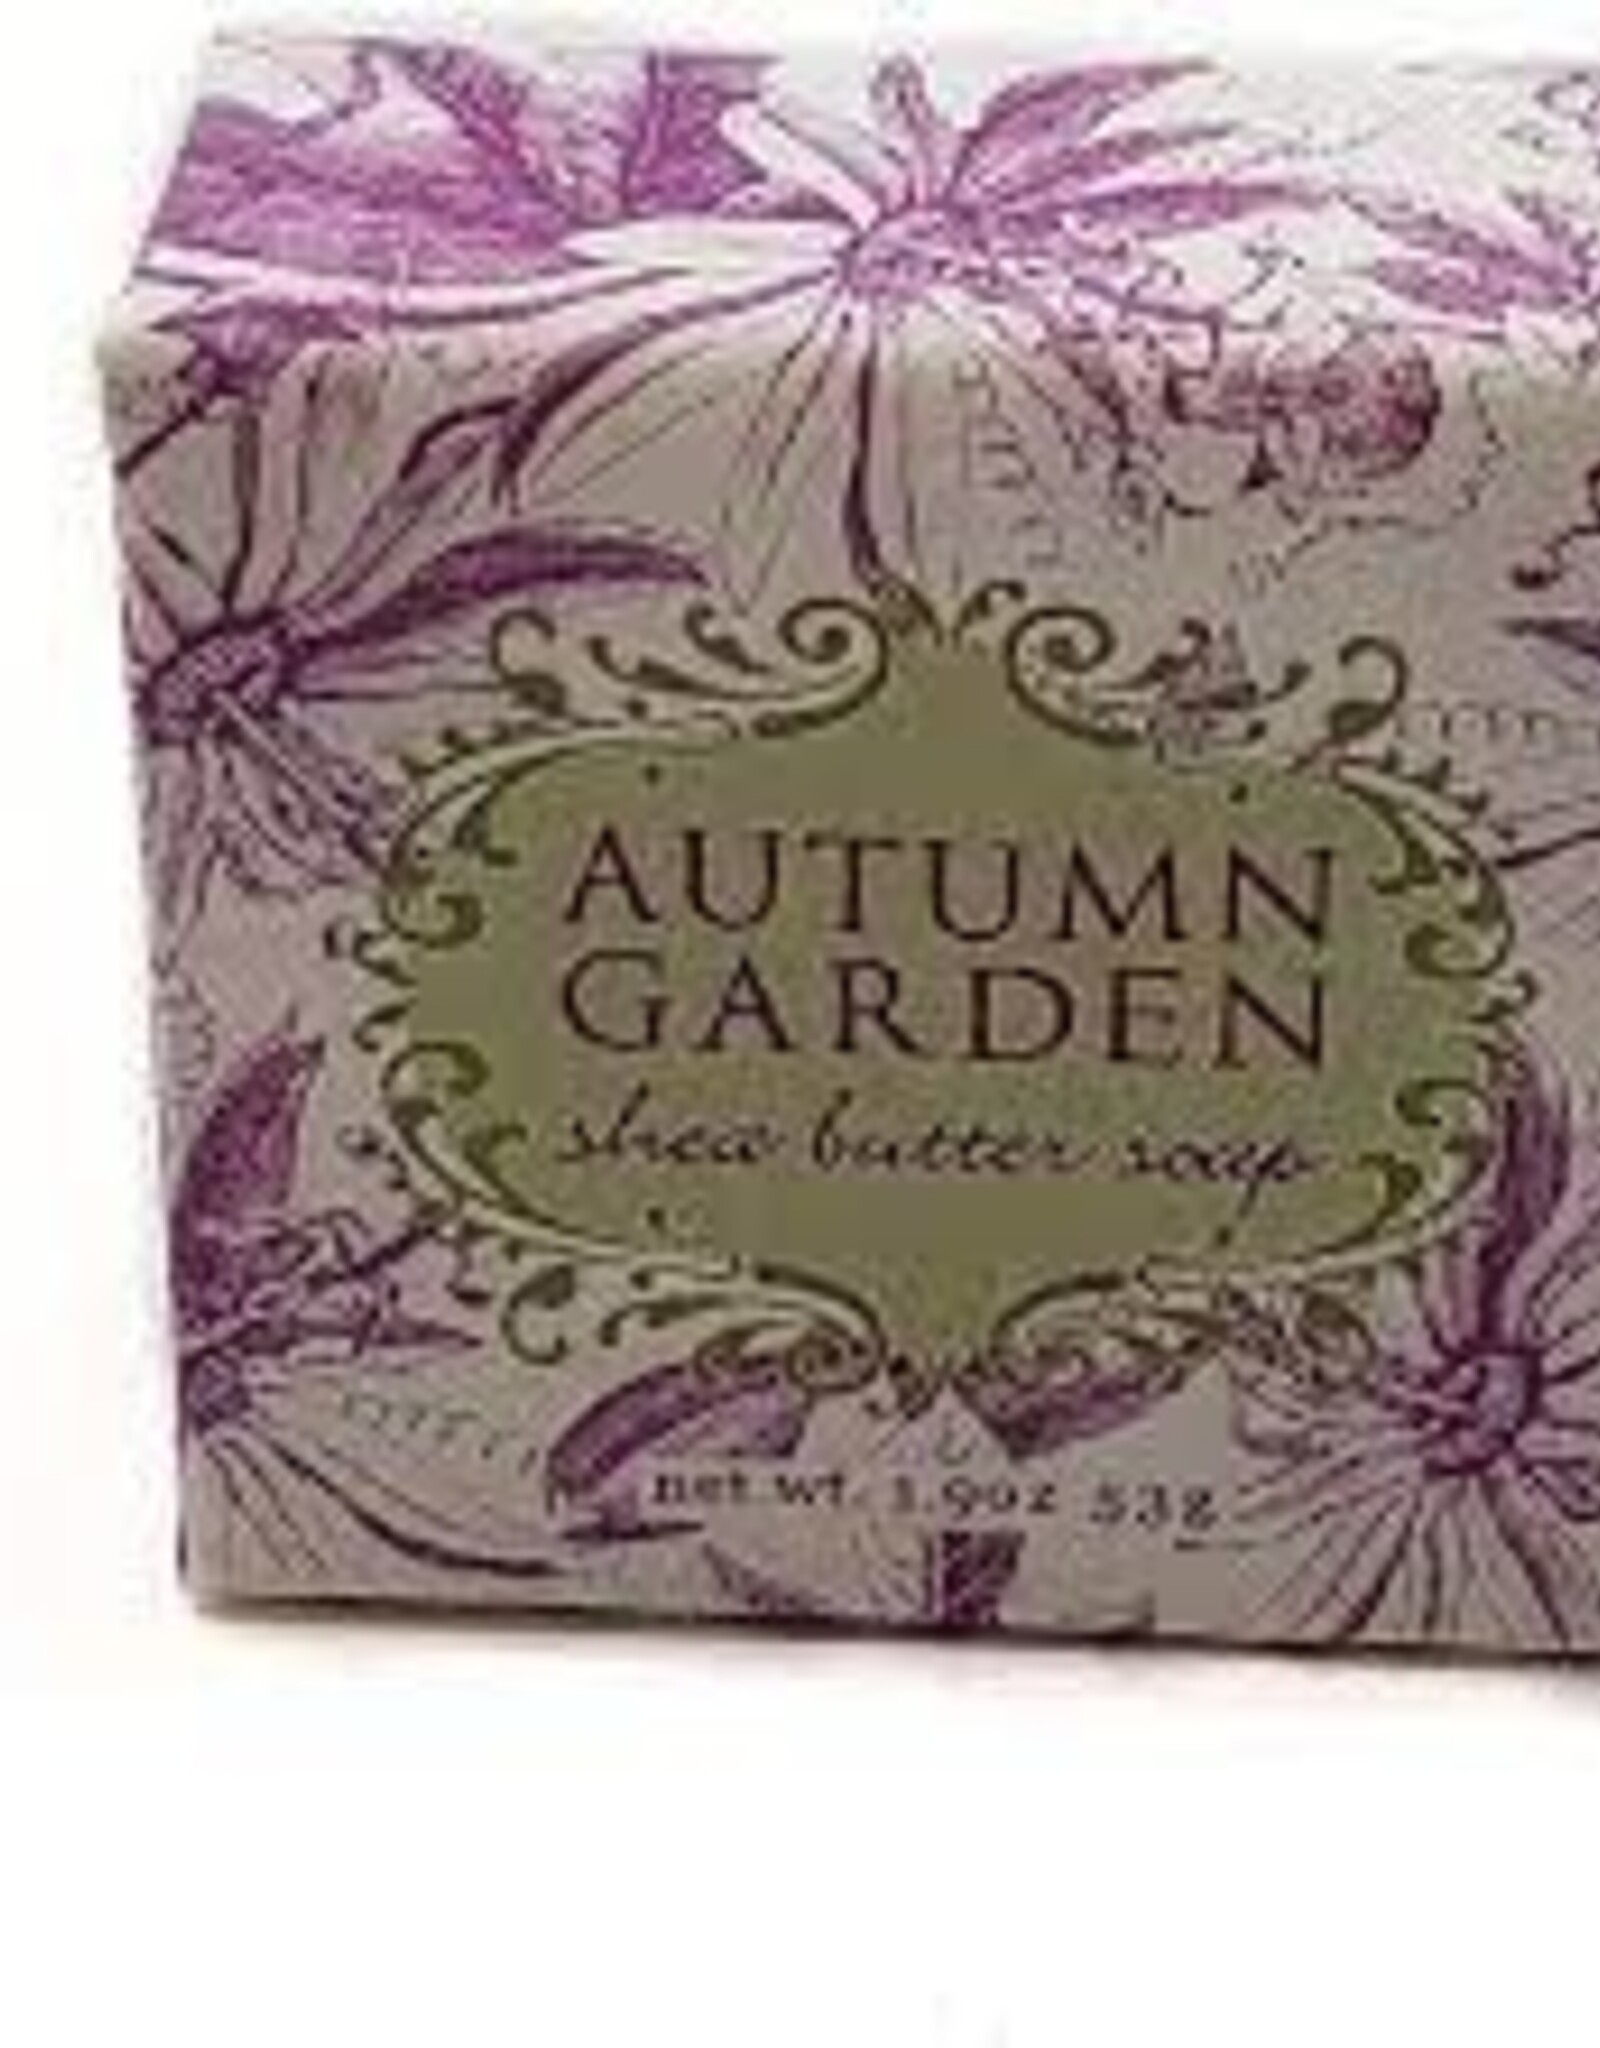 Fall Autumn Garden Bar Soap